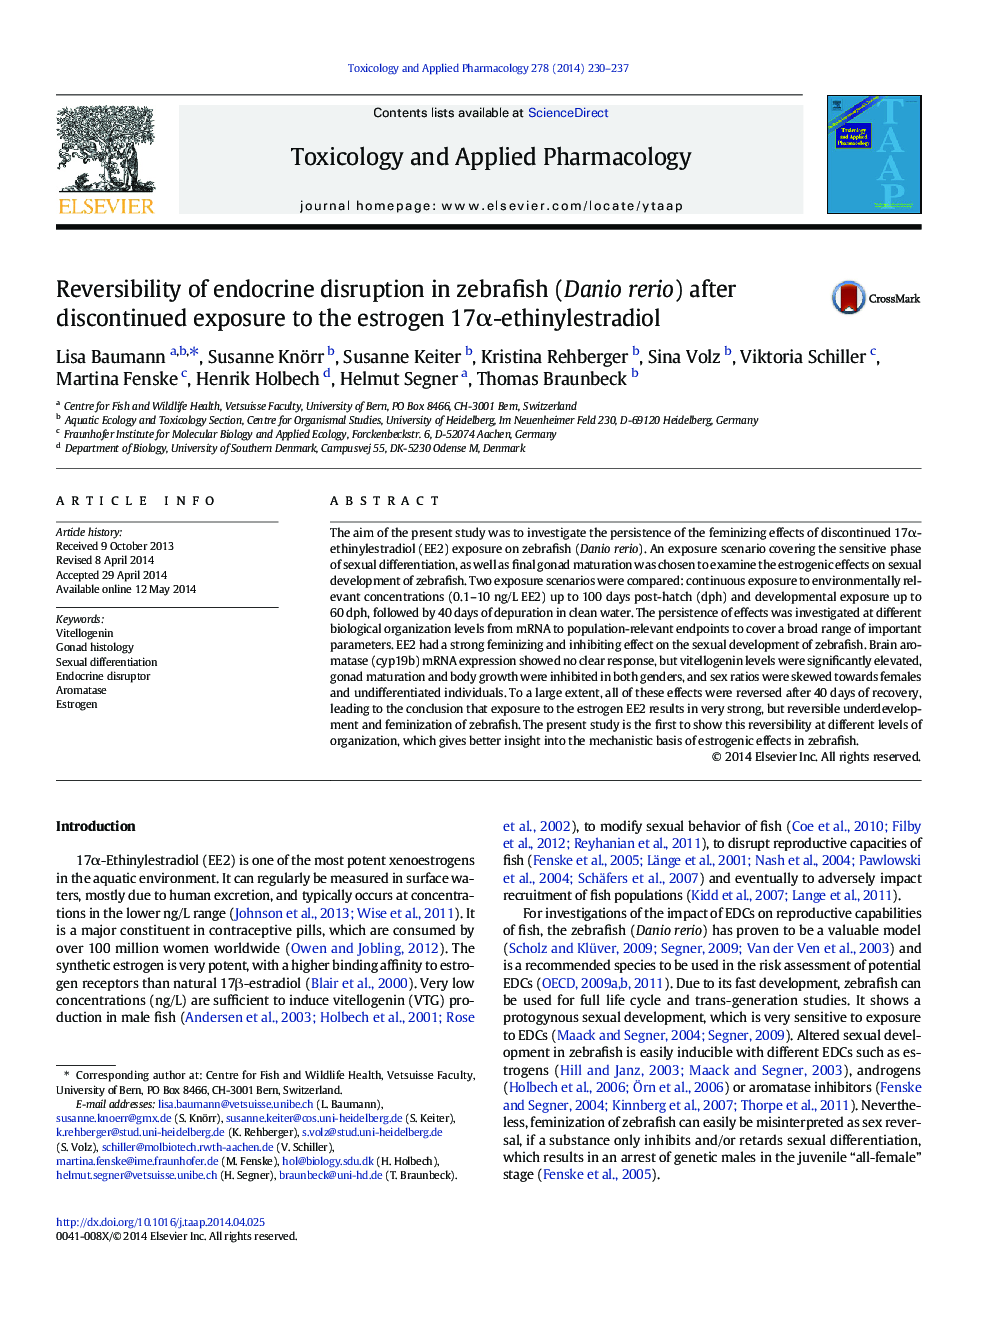 Reversibility of endocrine disruption in zebrafish (Danio rerio) after discontinued exposure to the estrogen 17Î±-ethinylestradiol